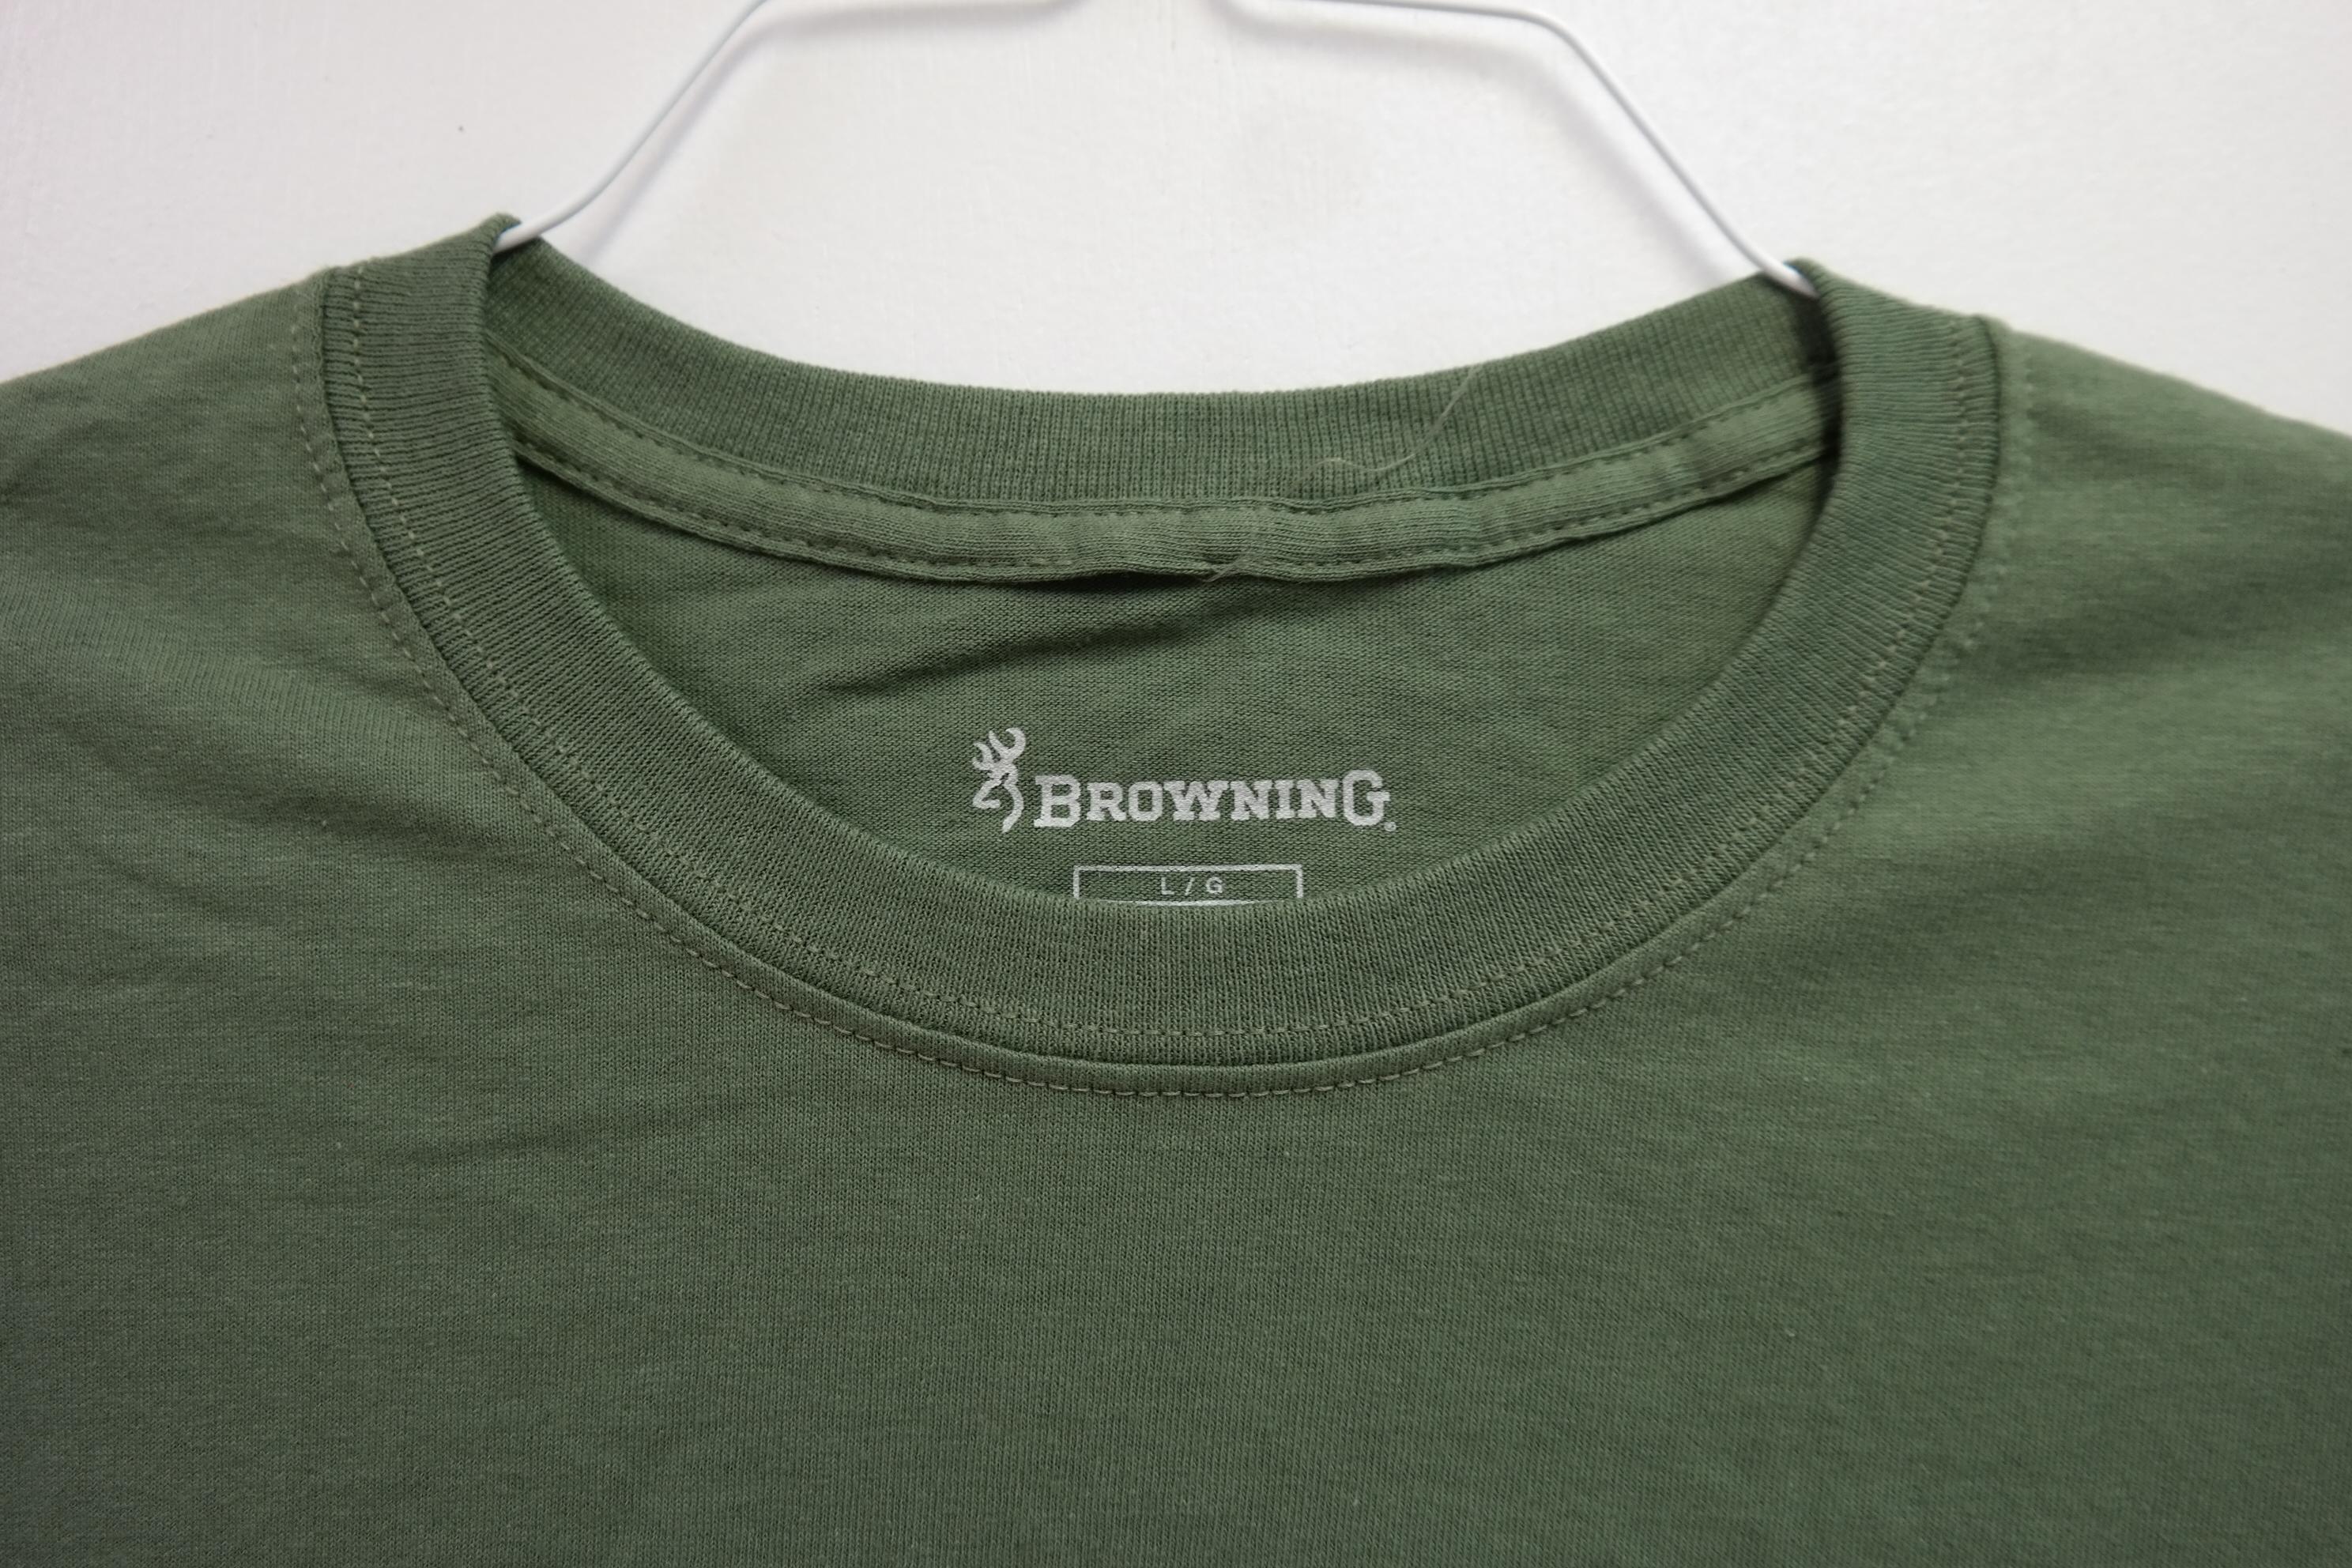 Browning t/shirts NEW